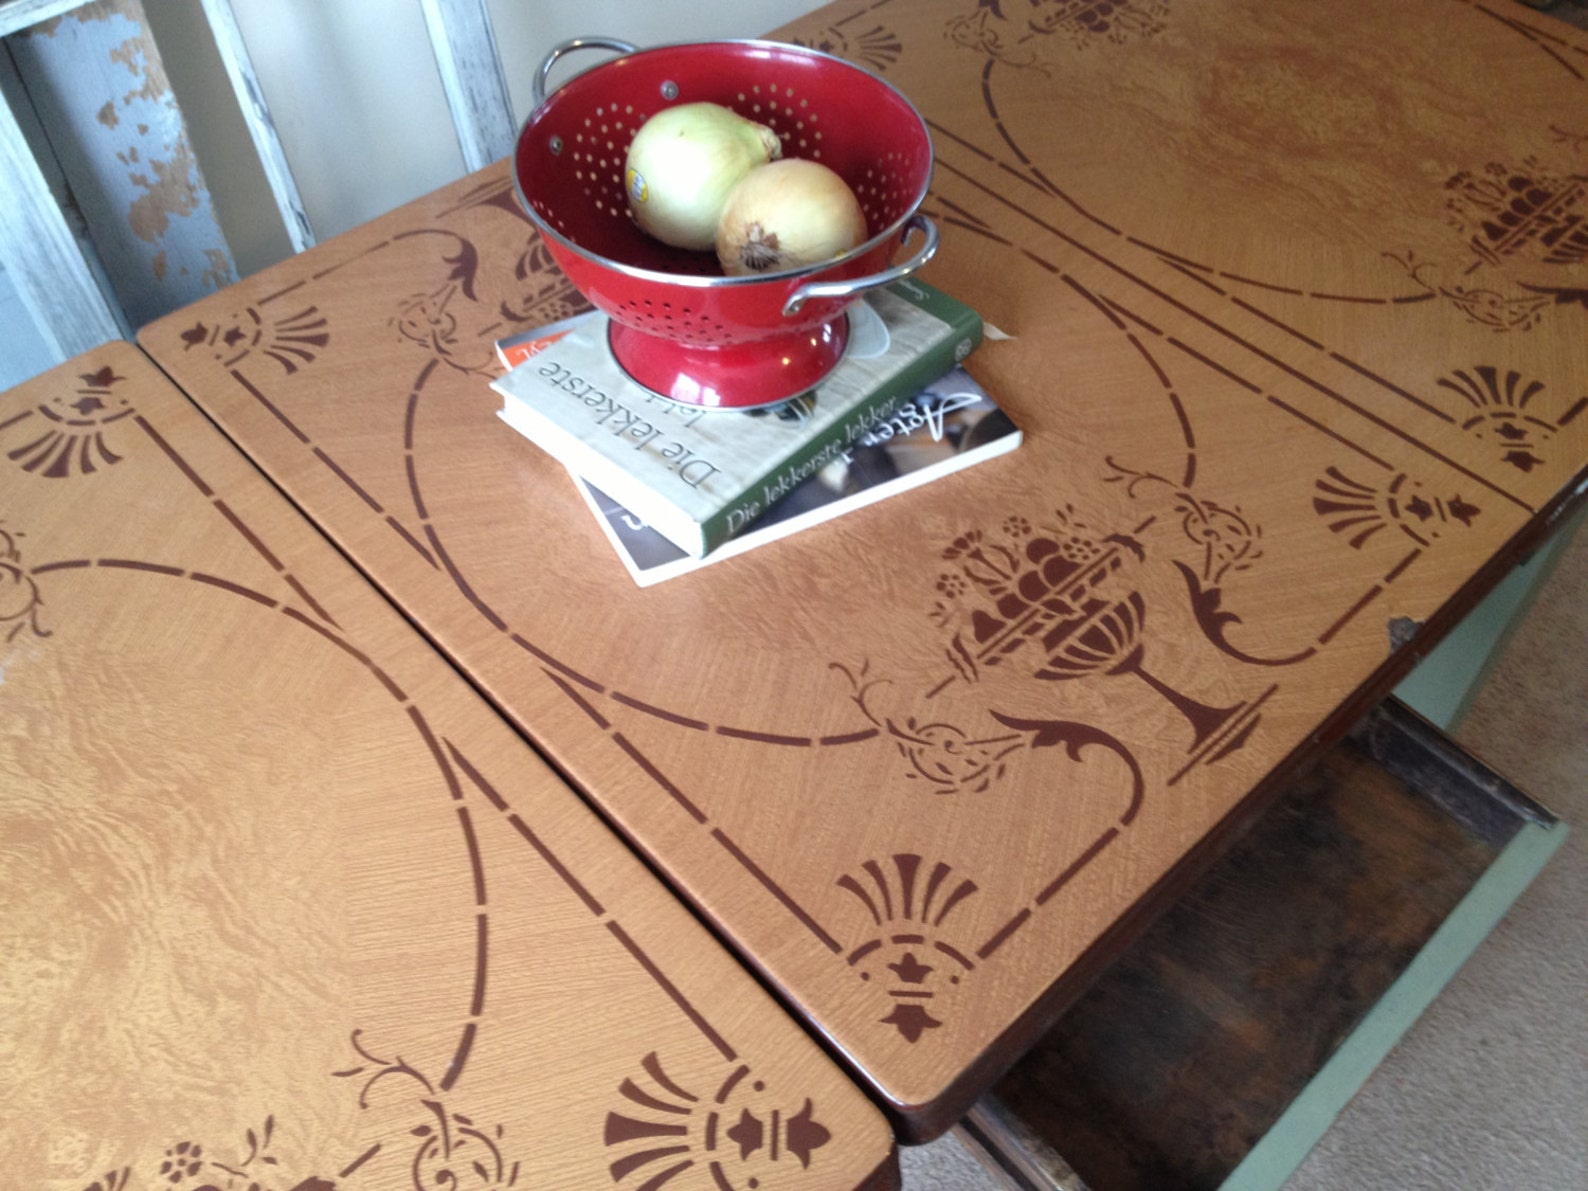 enamel top kitchen table for sale